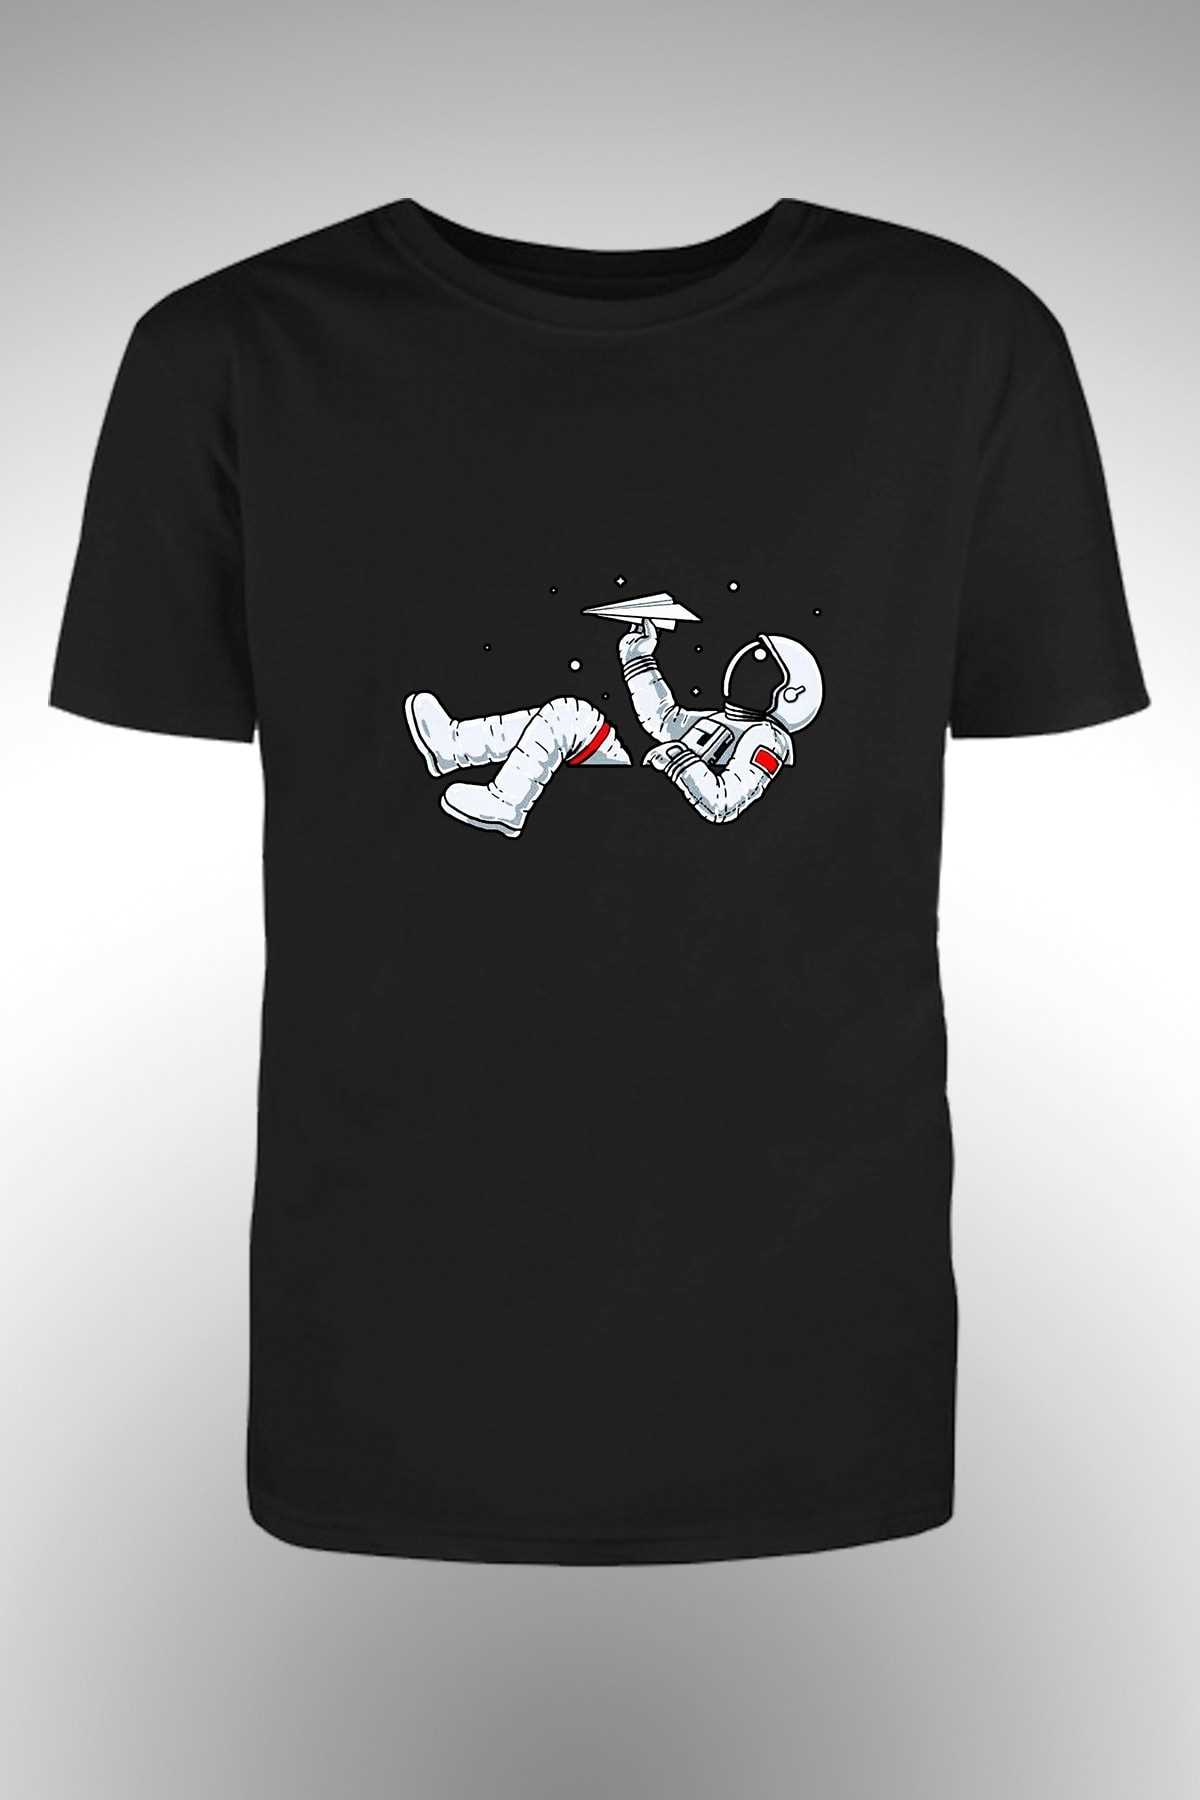 تی شرت مردانه فروش برند By Okat رنگ مشکی کد ty40272882